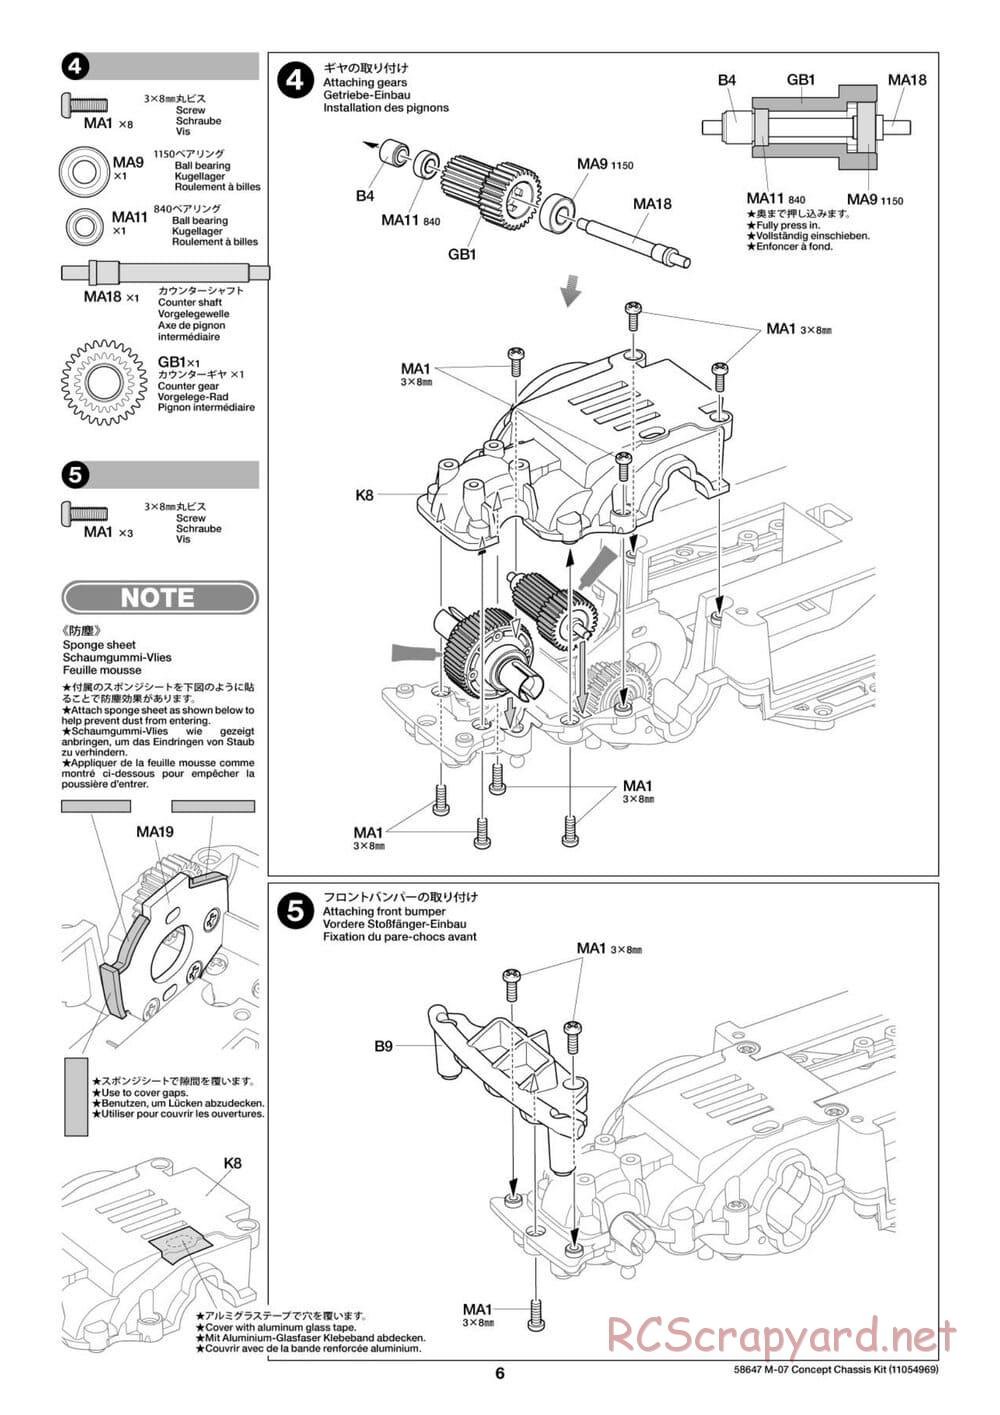 Tamiya - M-07 Concept Chassis - Manual - Page 6